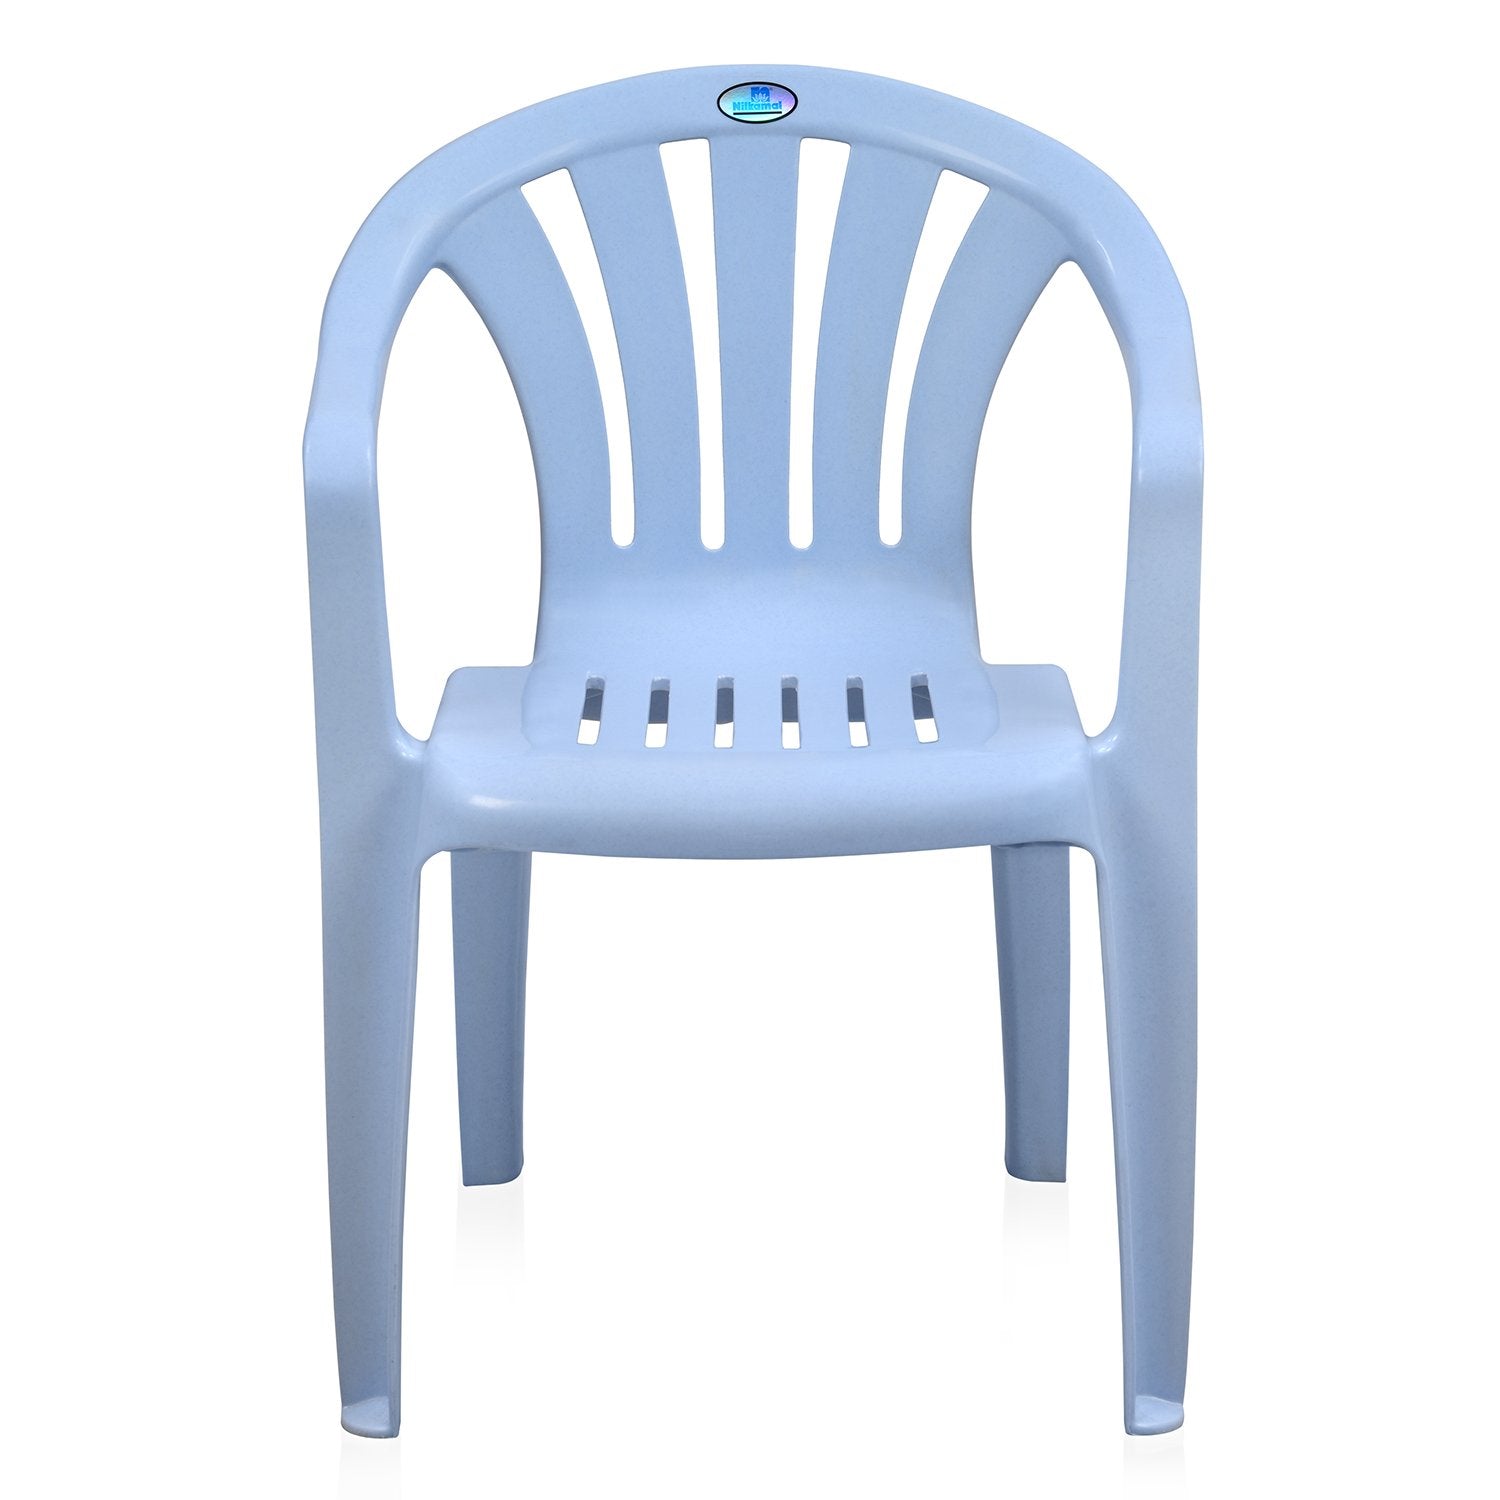 baby plastic chair online